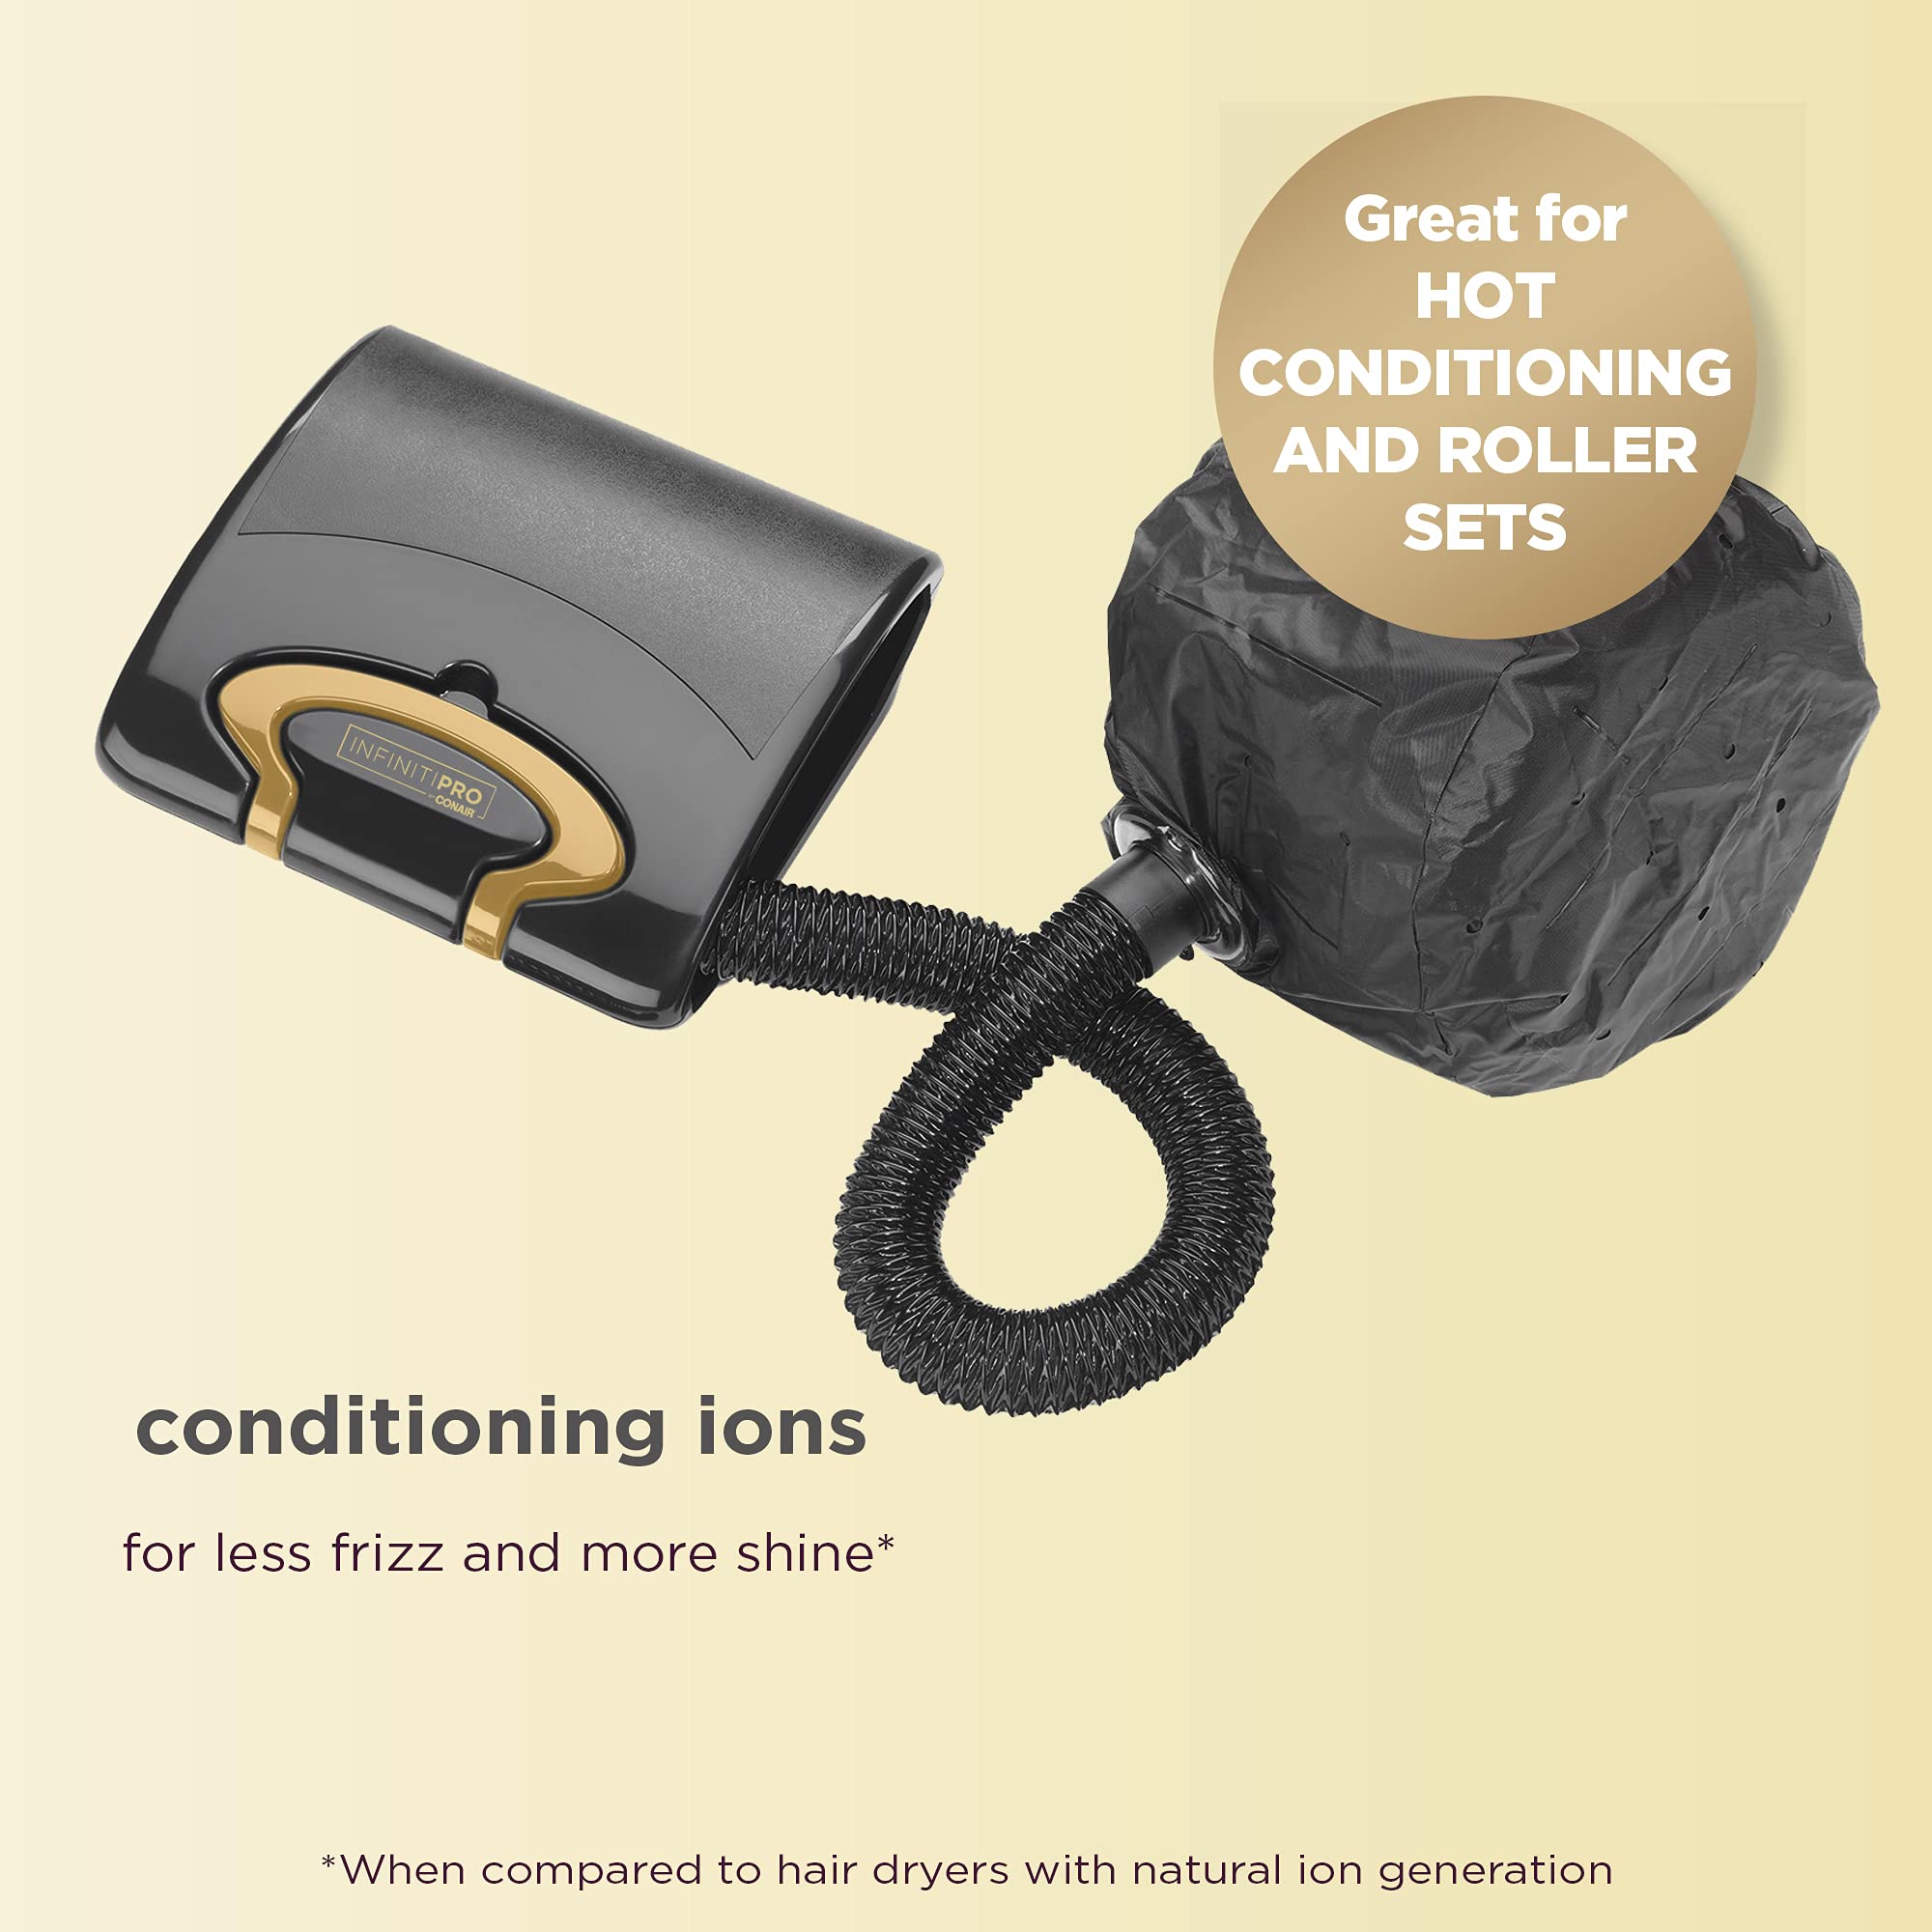 INFINITIPRO BY CONAIR GOLD Bonnet Hair Dryer, Soft Portable Bonnet Style Hair Dryer